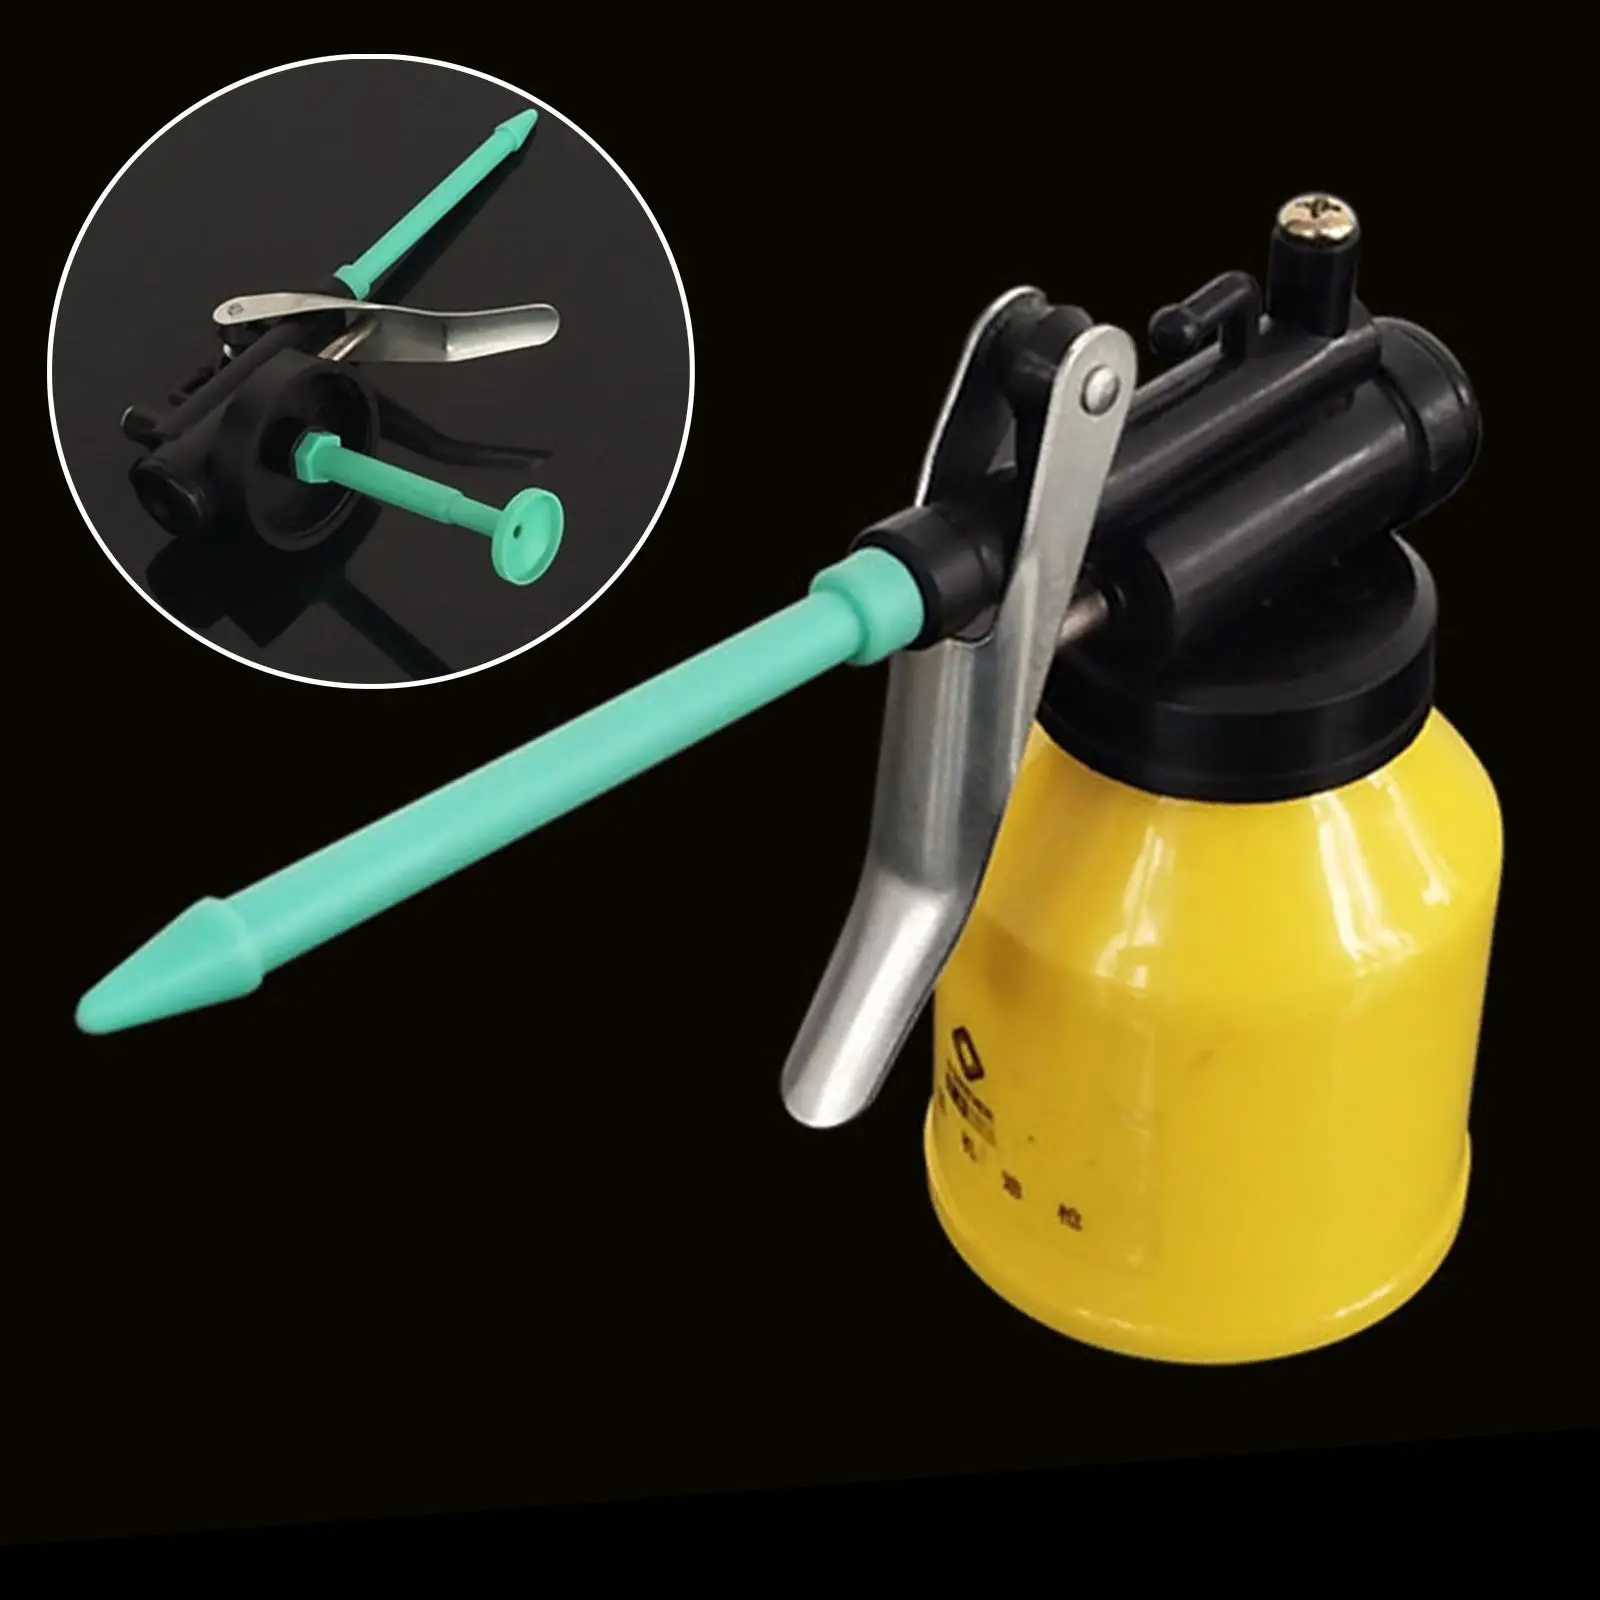 High Pressure Oiler High Pressure Hand Pump Oiler Portable Oil Pot Bottle with